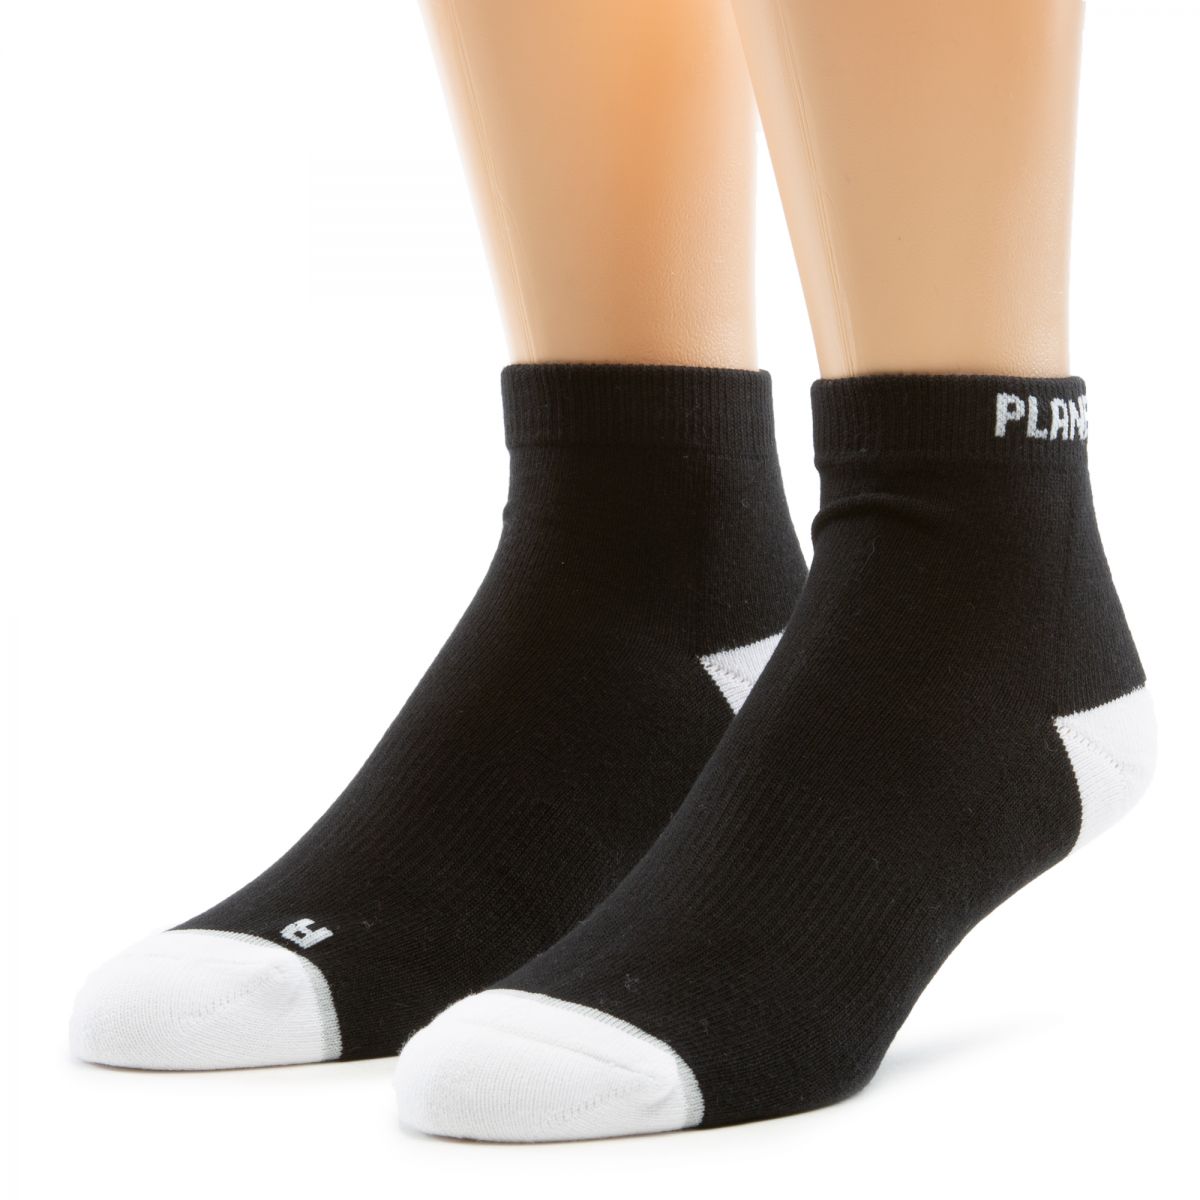 Ankle Socks 2 Pack, BLACK